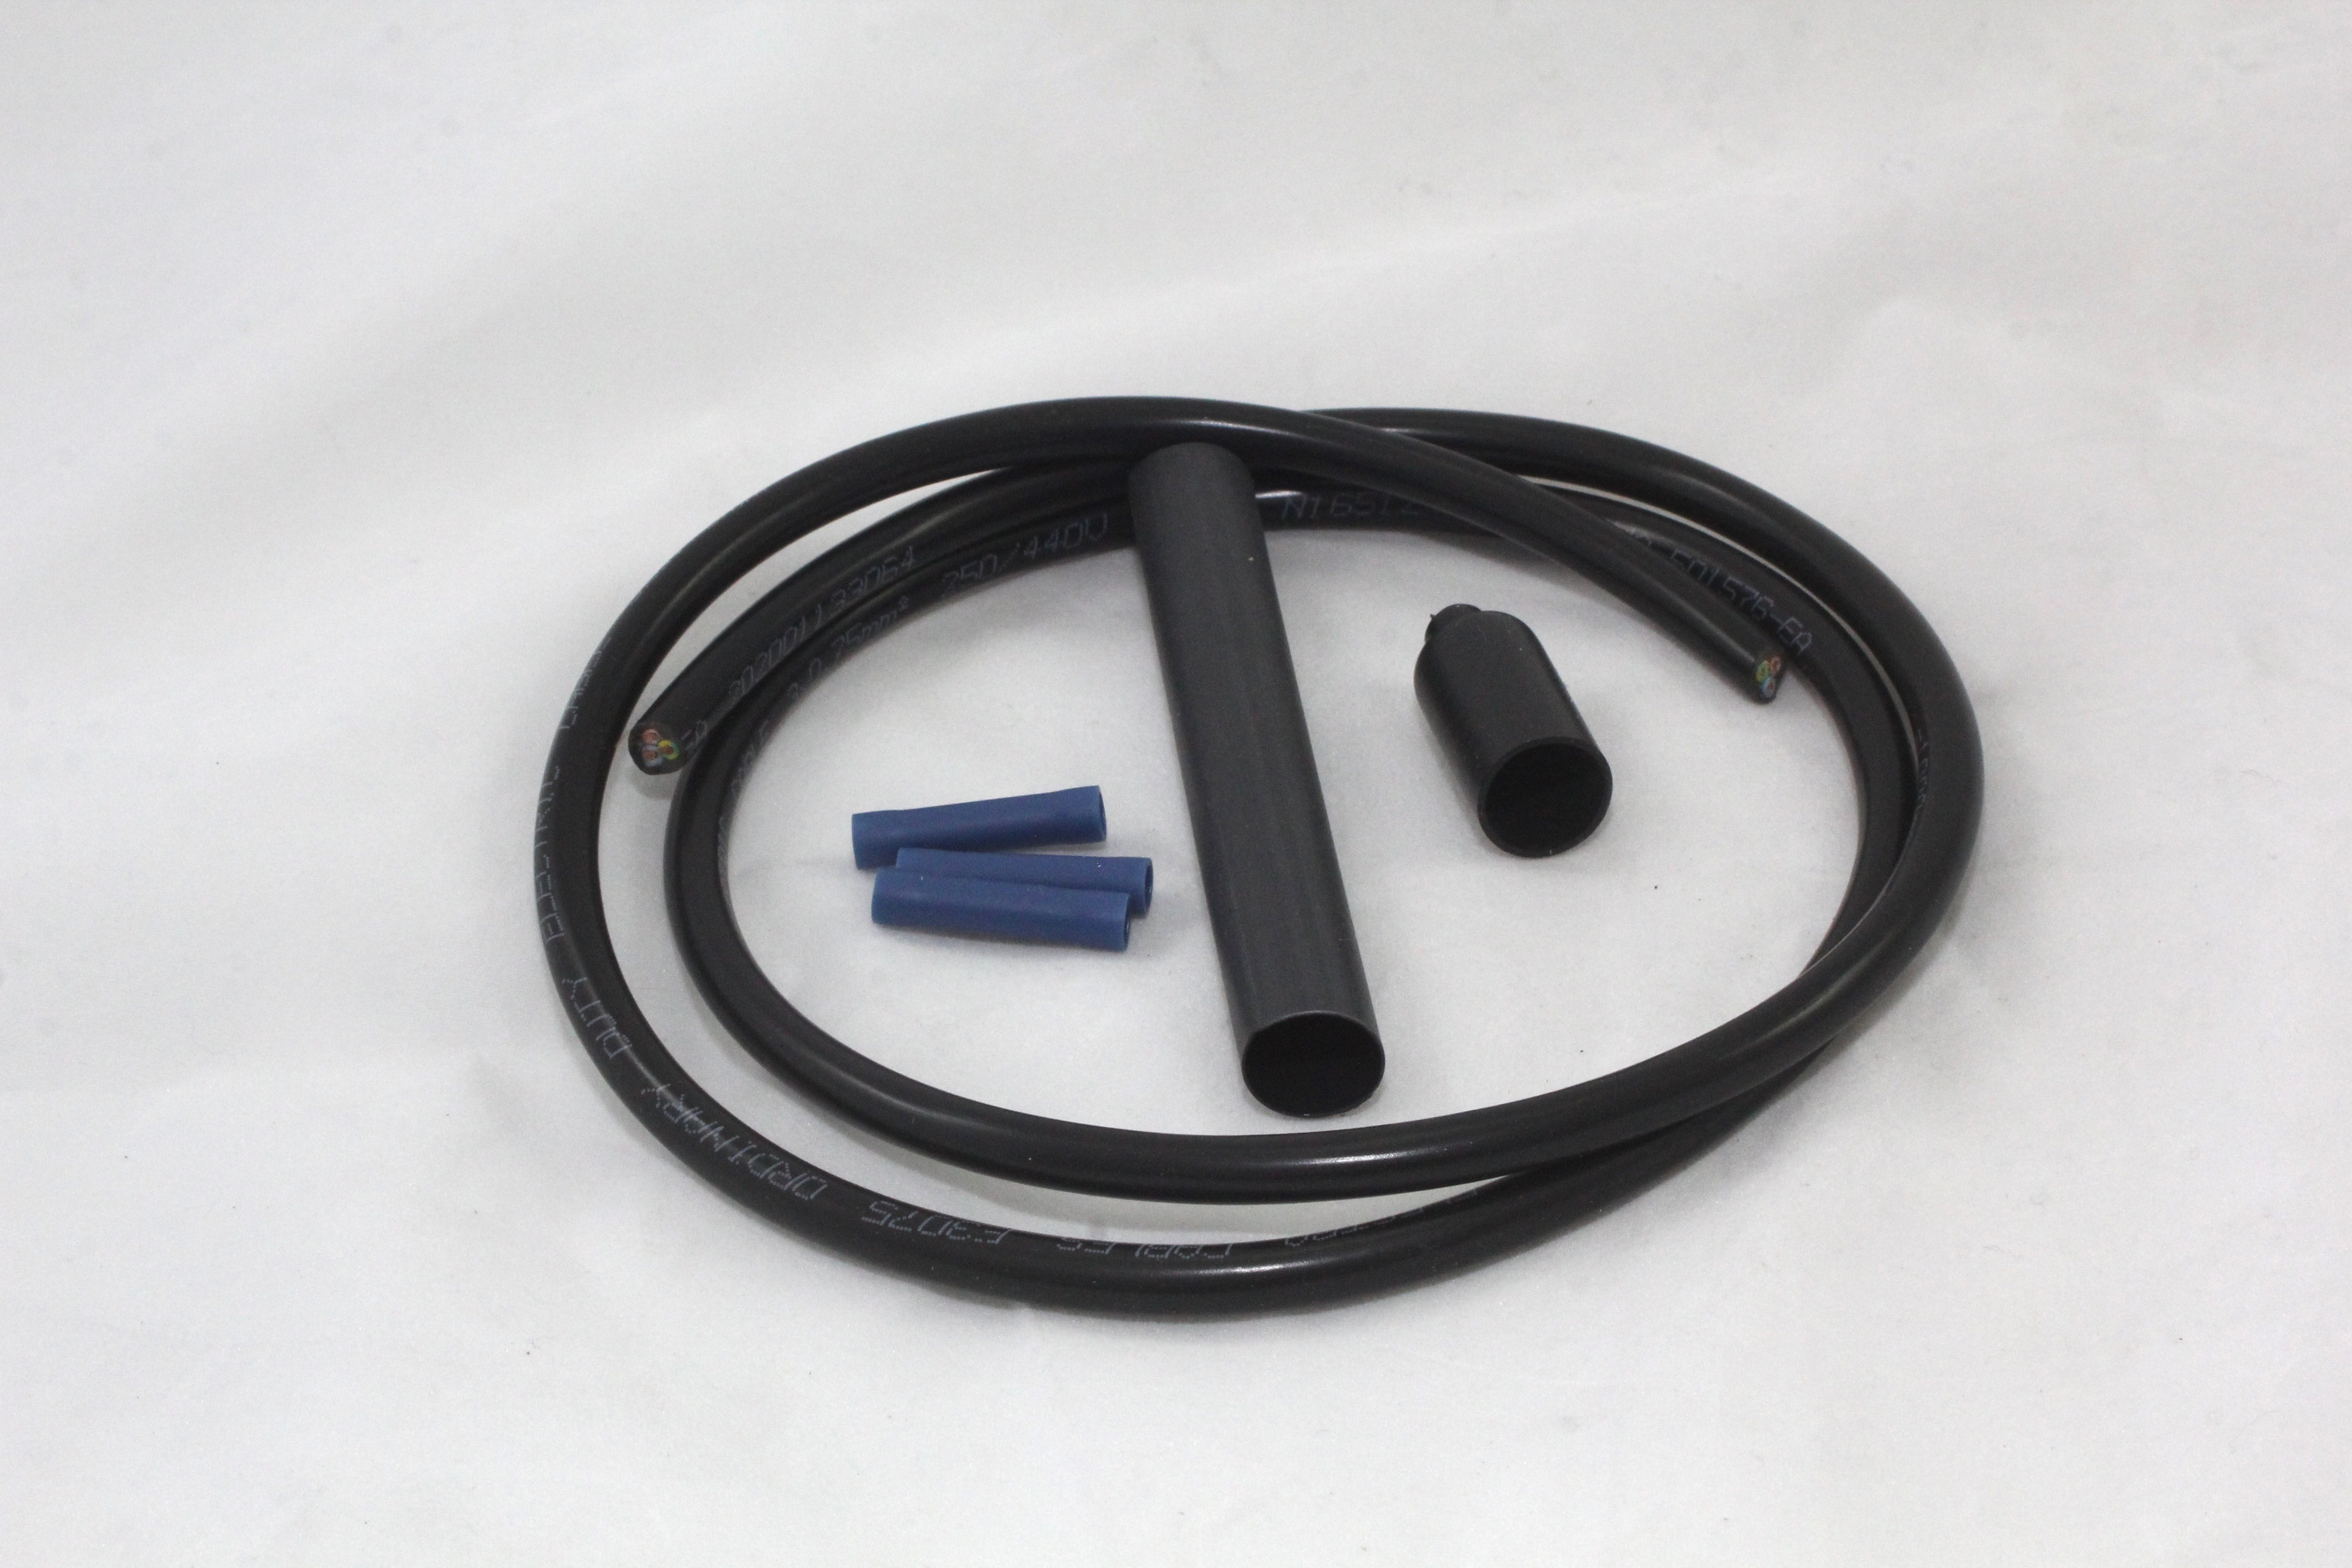 Termination Kit to suit Chromalox Constant Watt Blue Cable